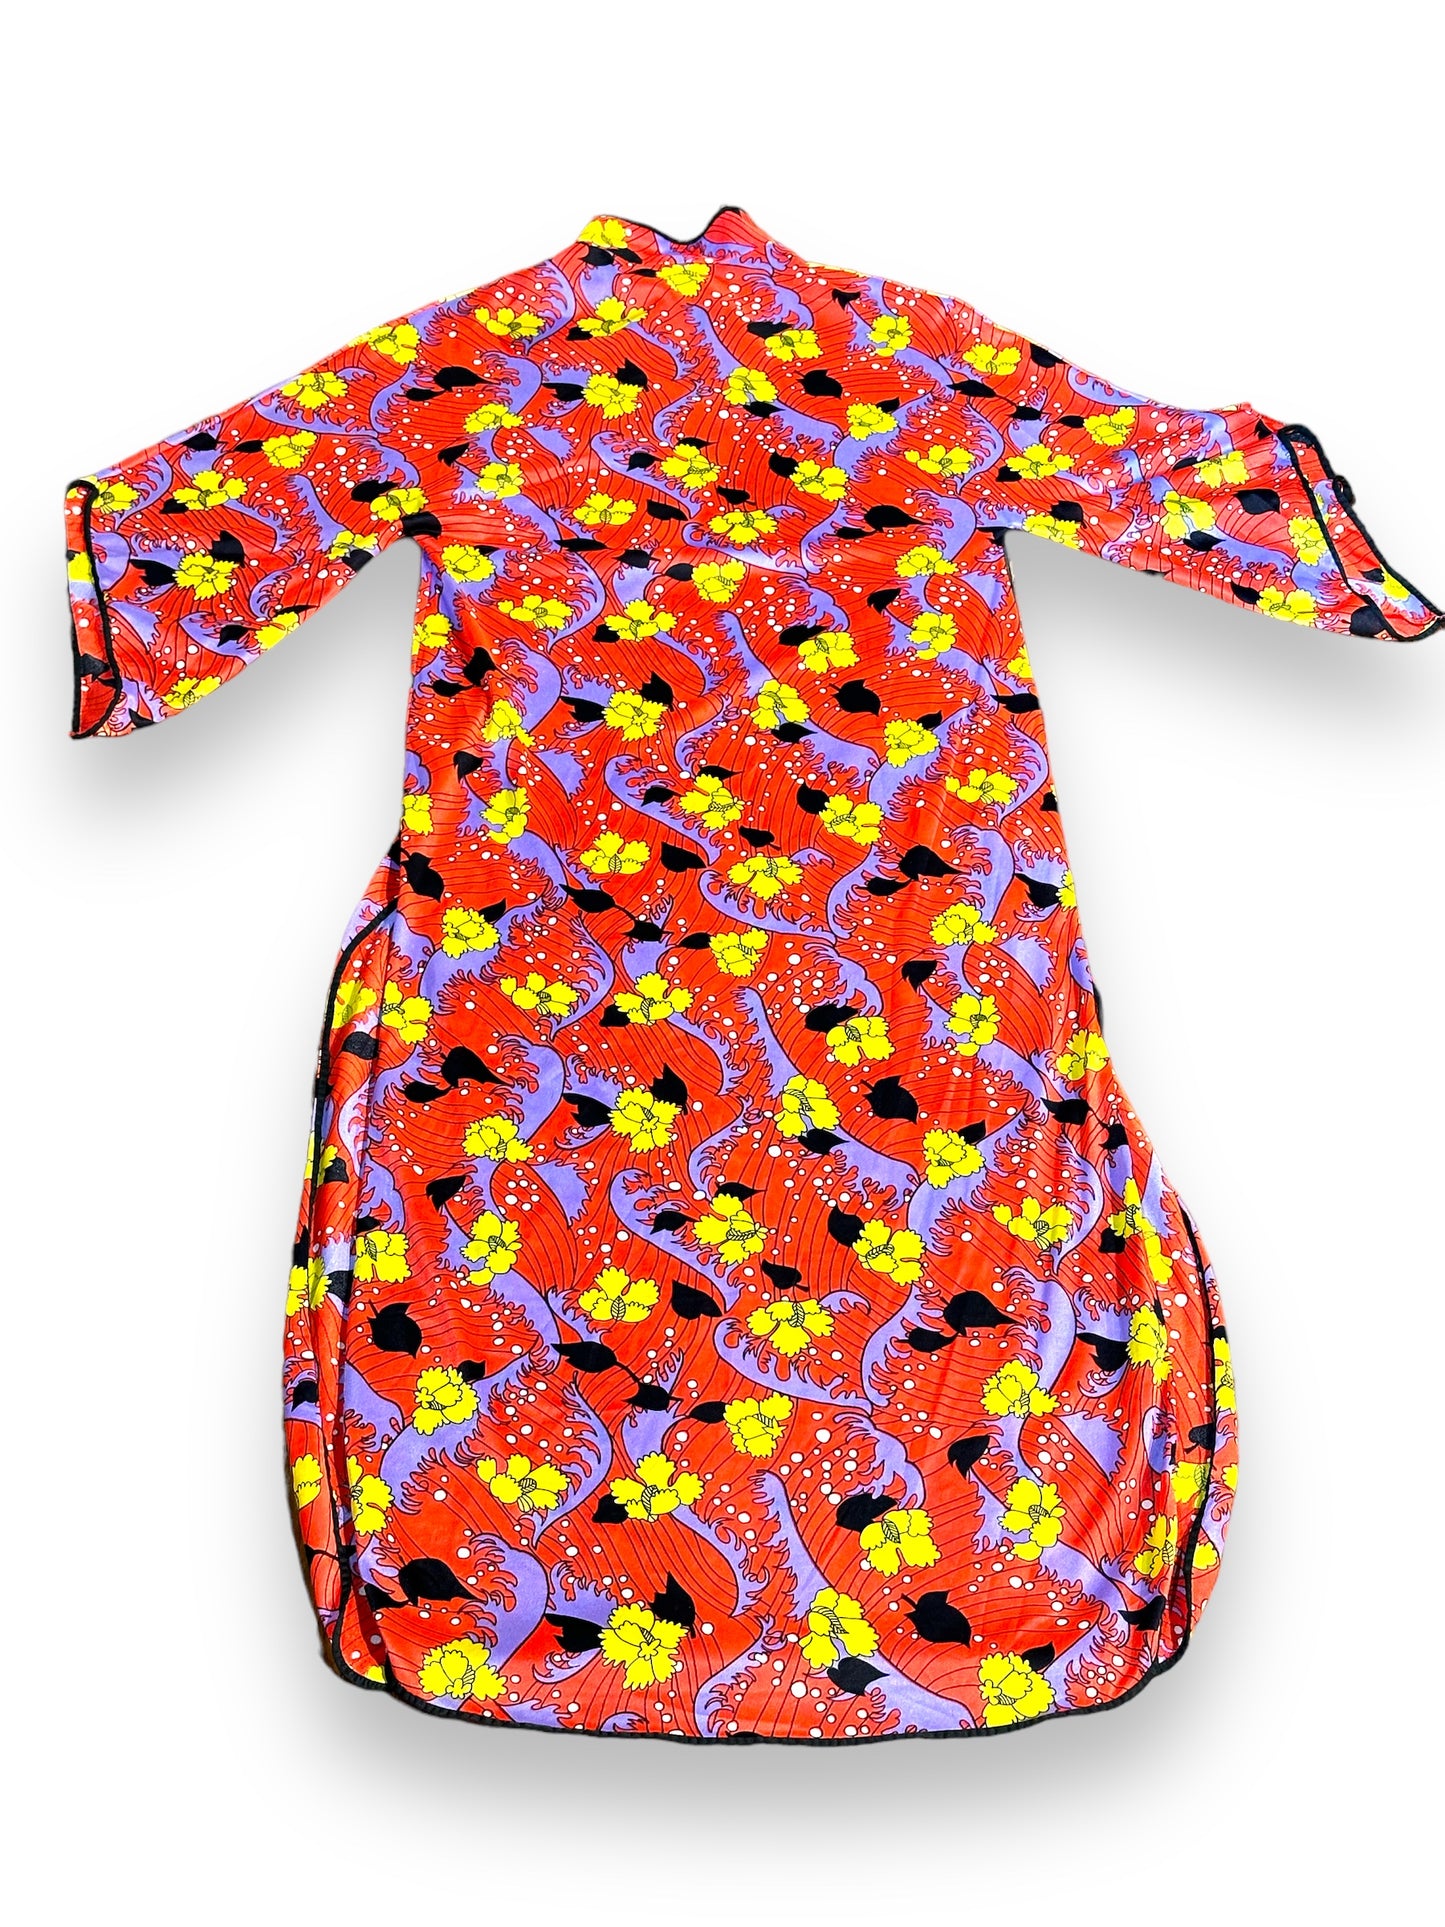 1970s “Artistique” Mumu Dress